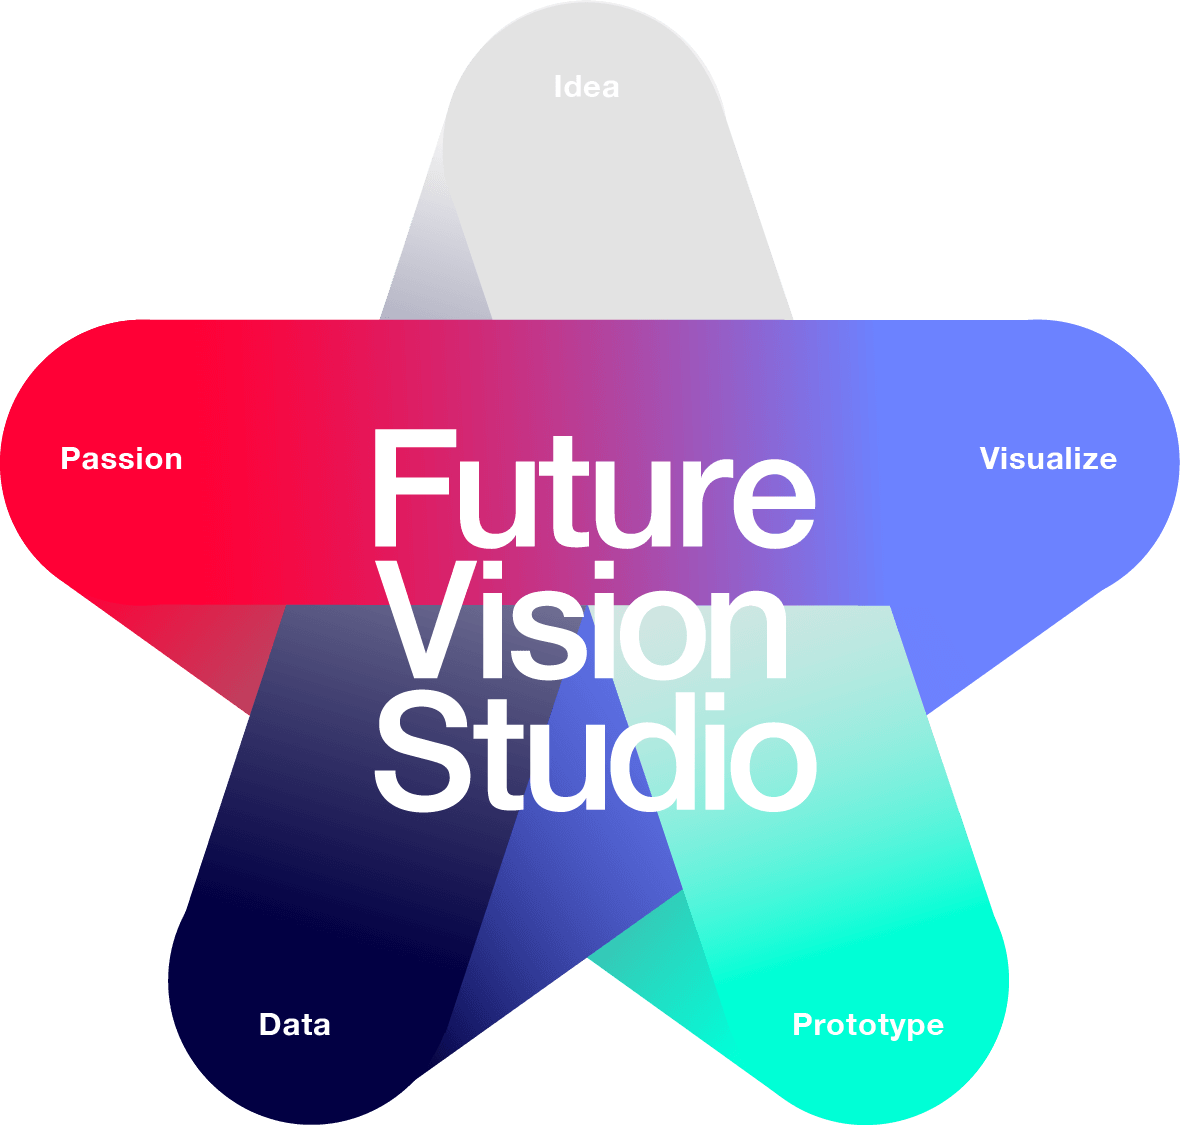 Data Idea Visualize Prototype VISION